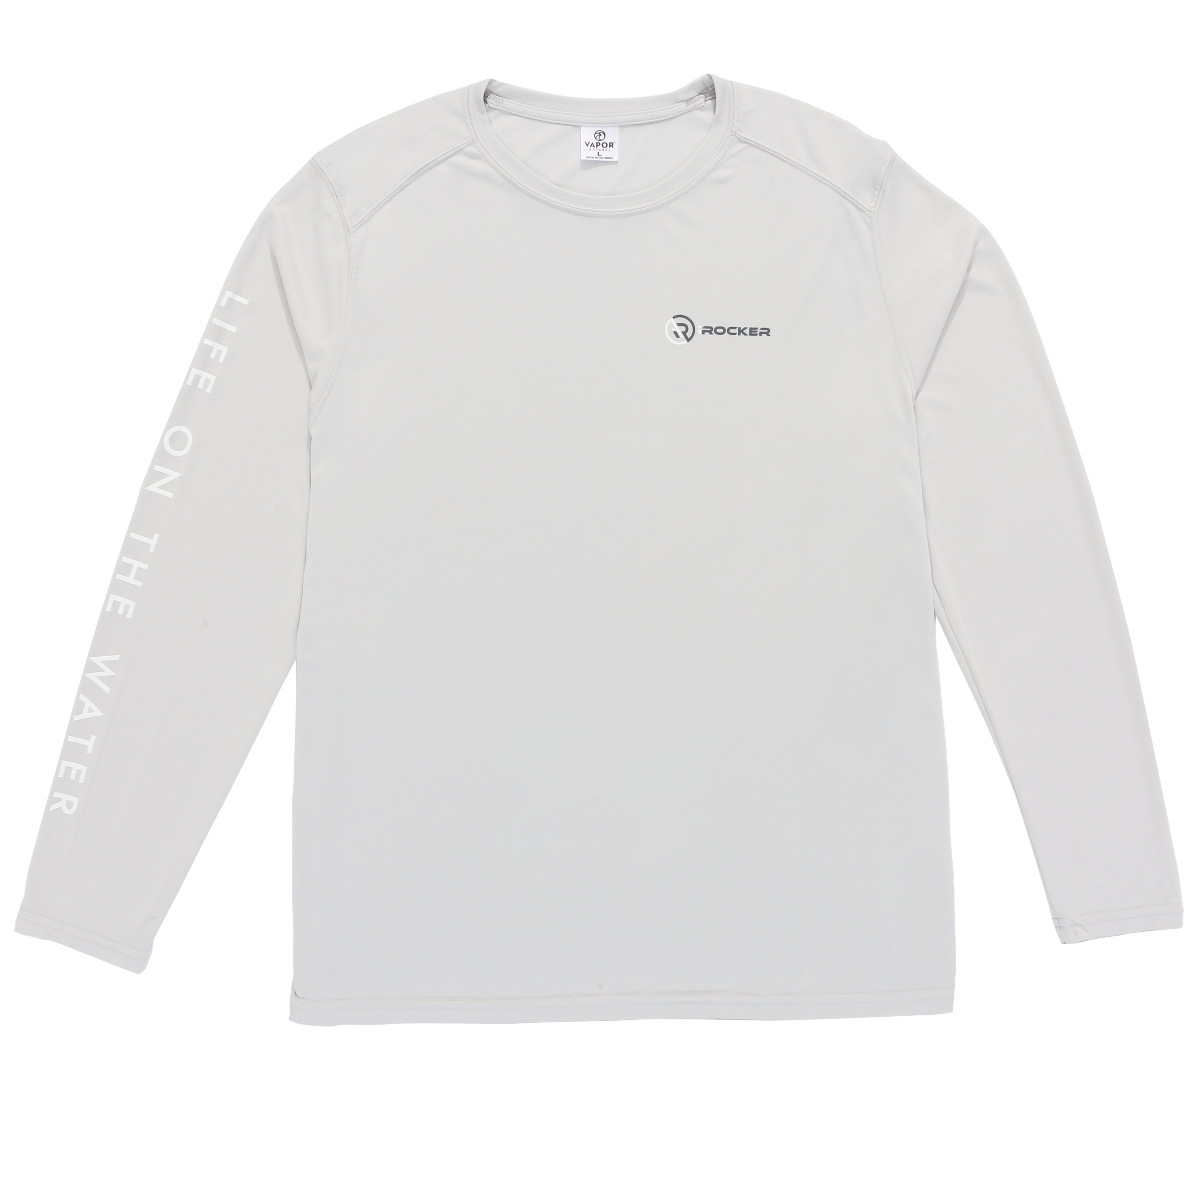 Men's Eco Sol Long-Sleeve Shirt UPF 50+